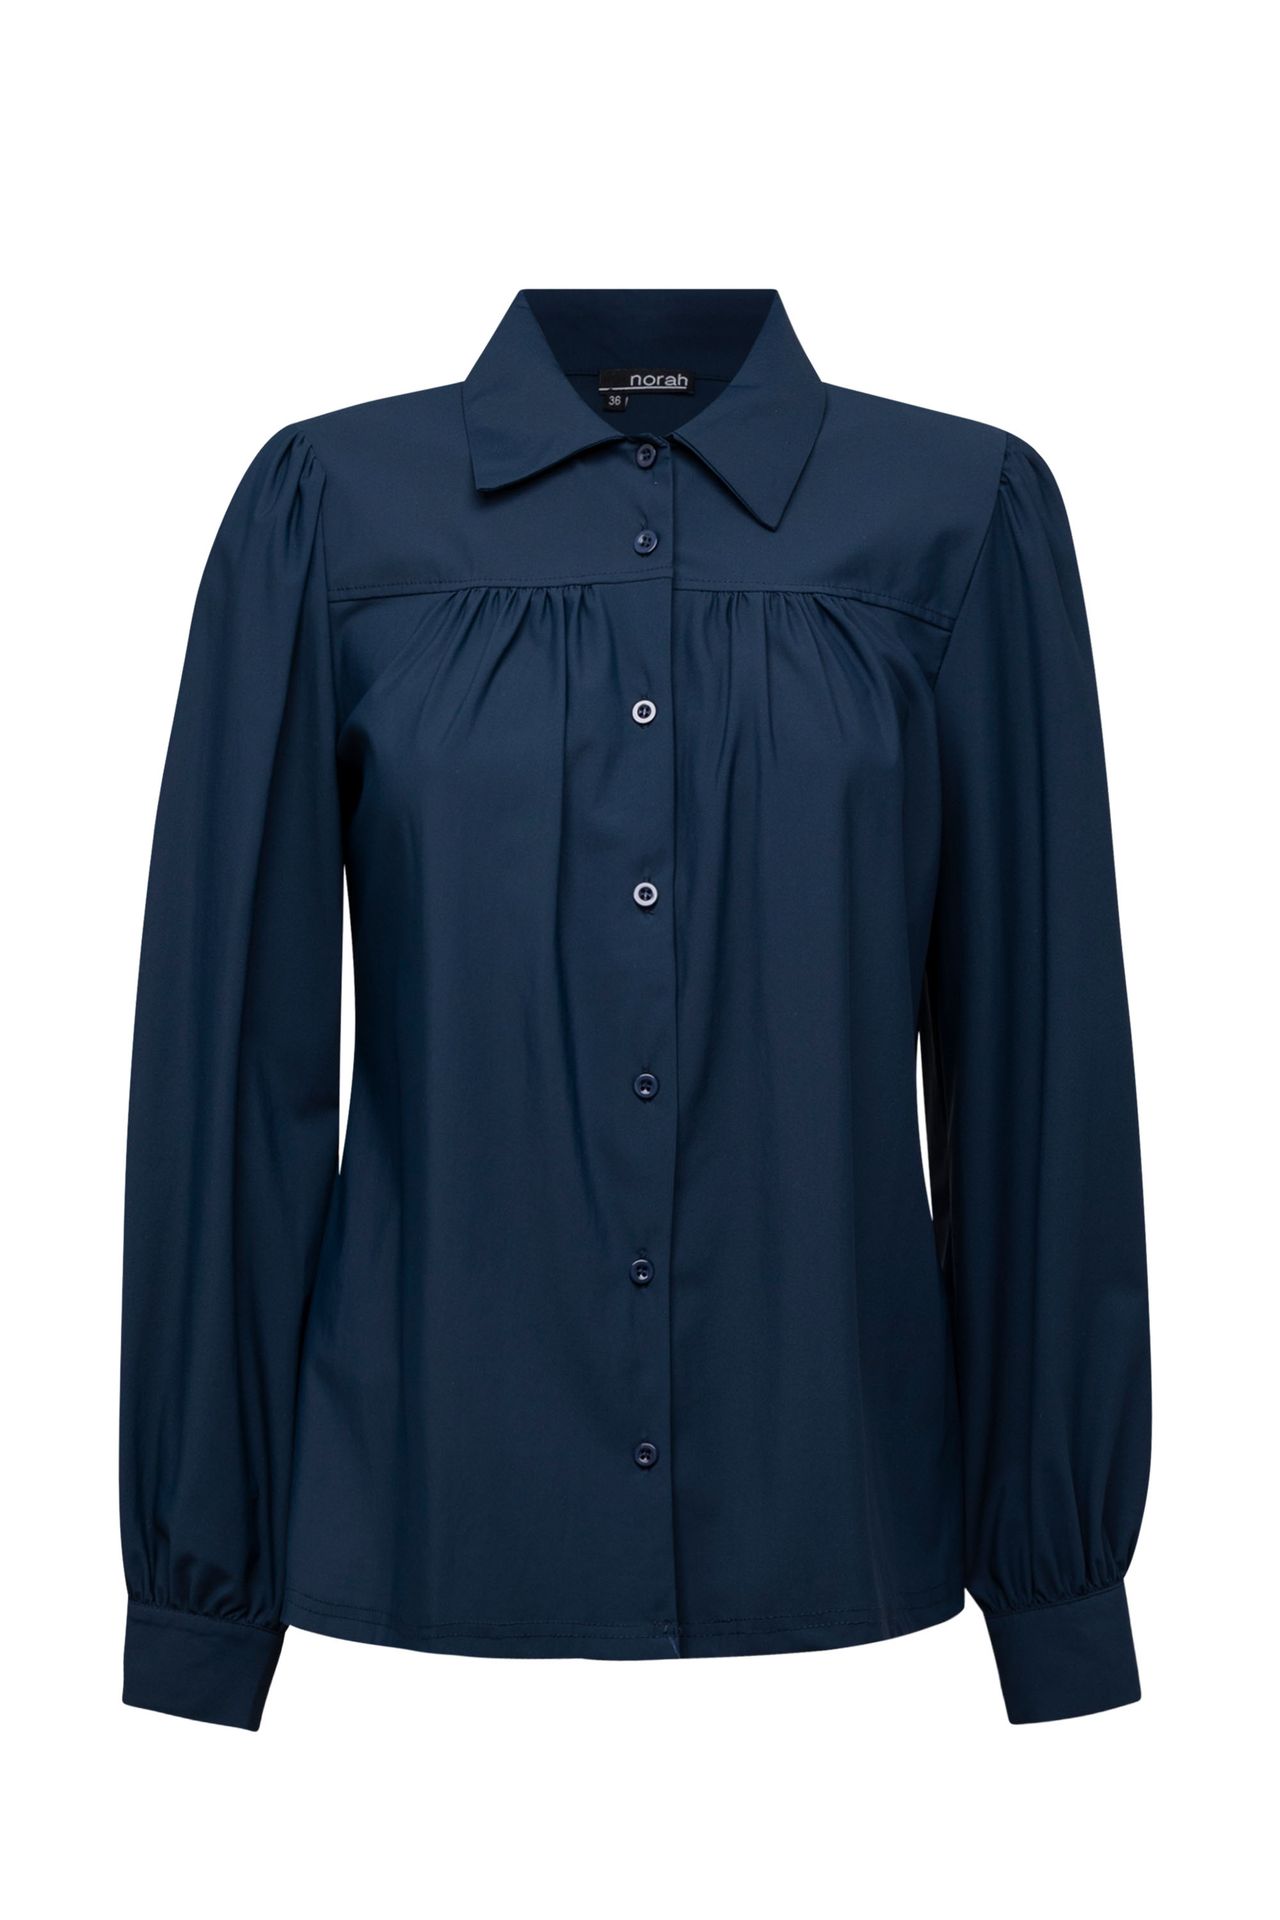 Norah Blauwe blouse van travelstof dark blue 213470-499